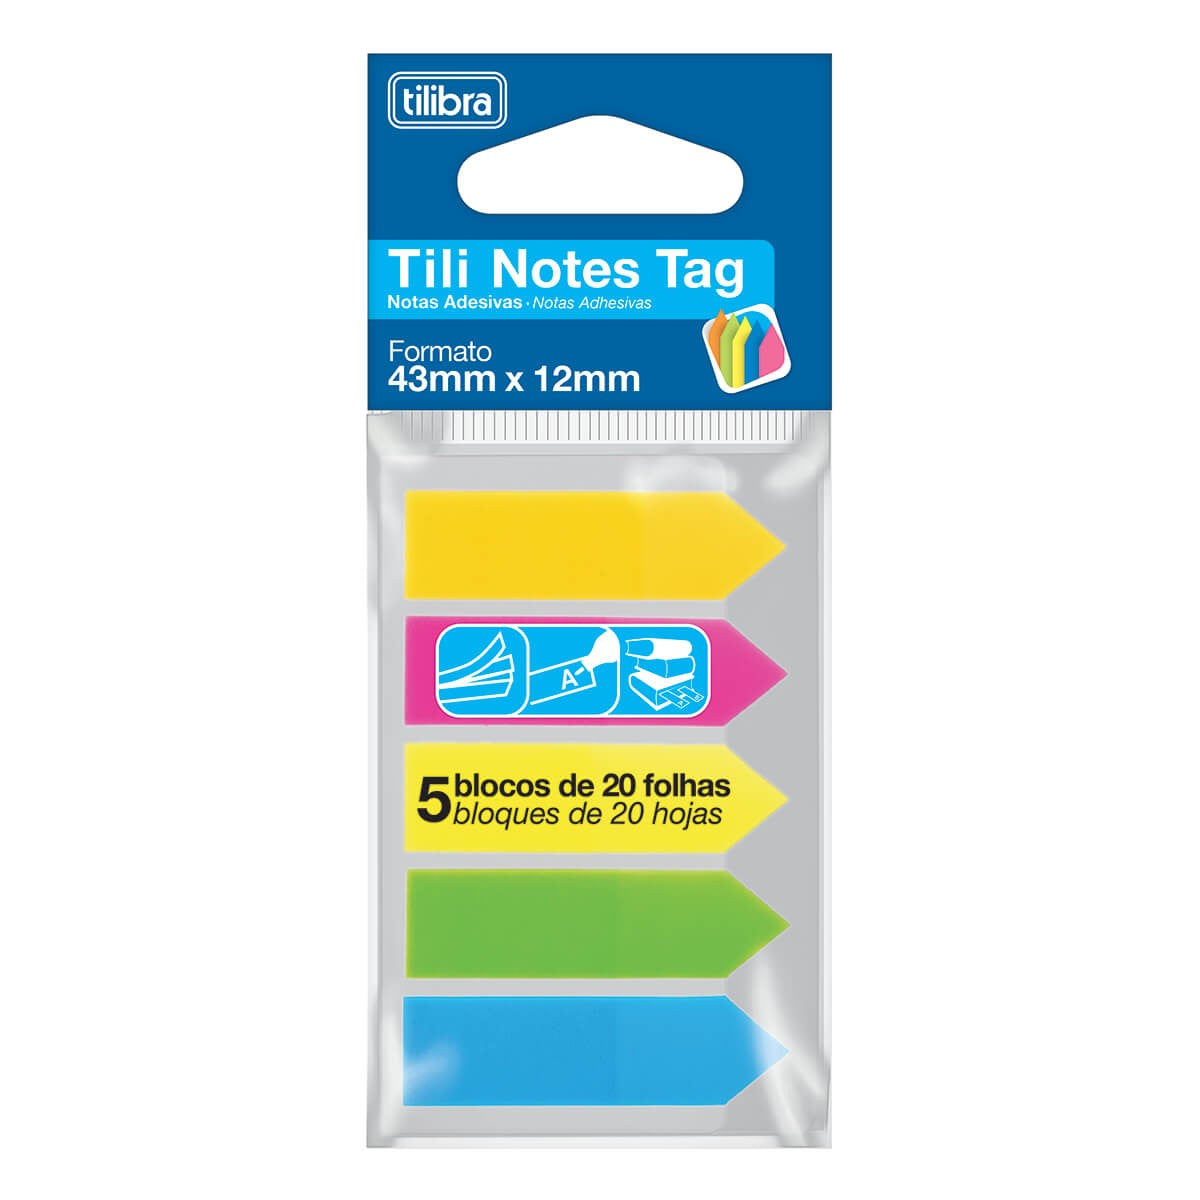 Flags - Tilibra -Tili Notes Tag 43mm x 12mm